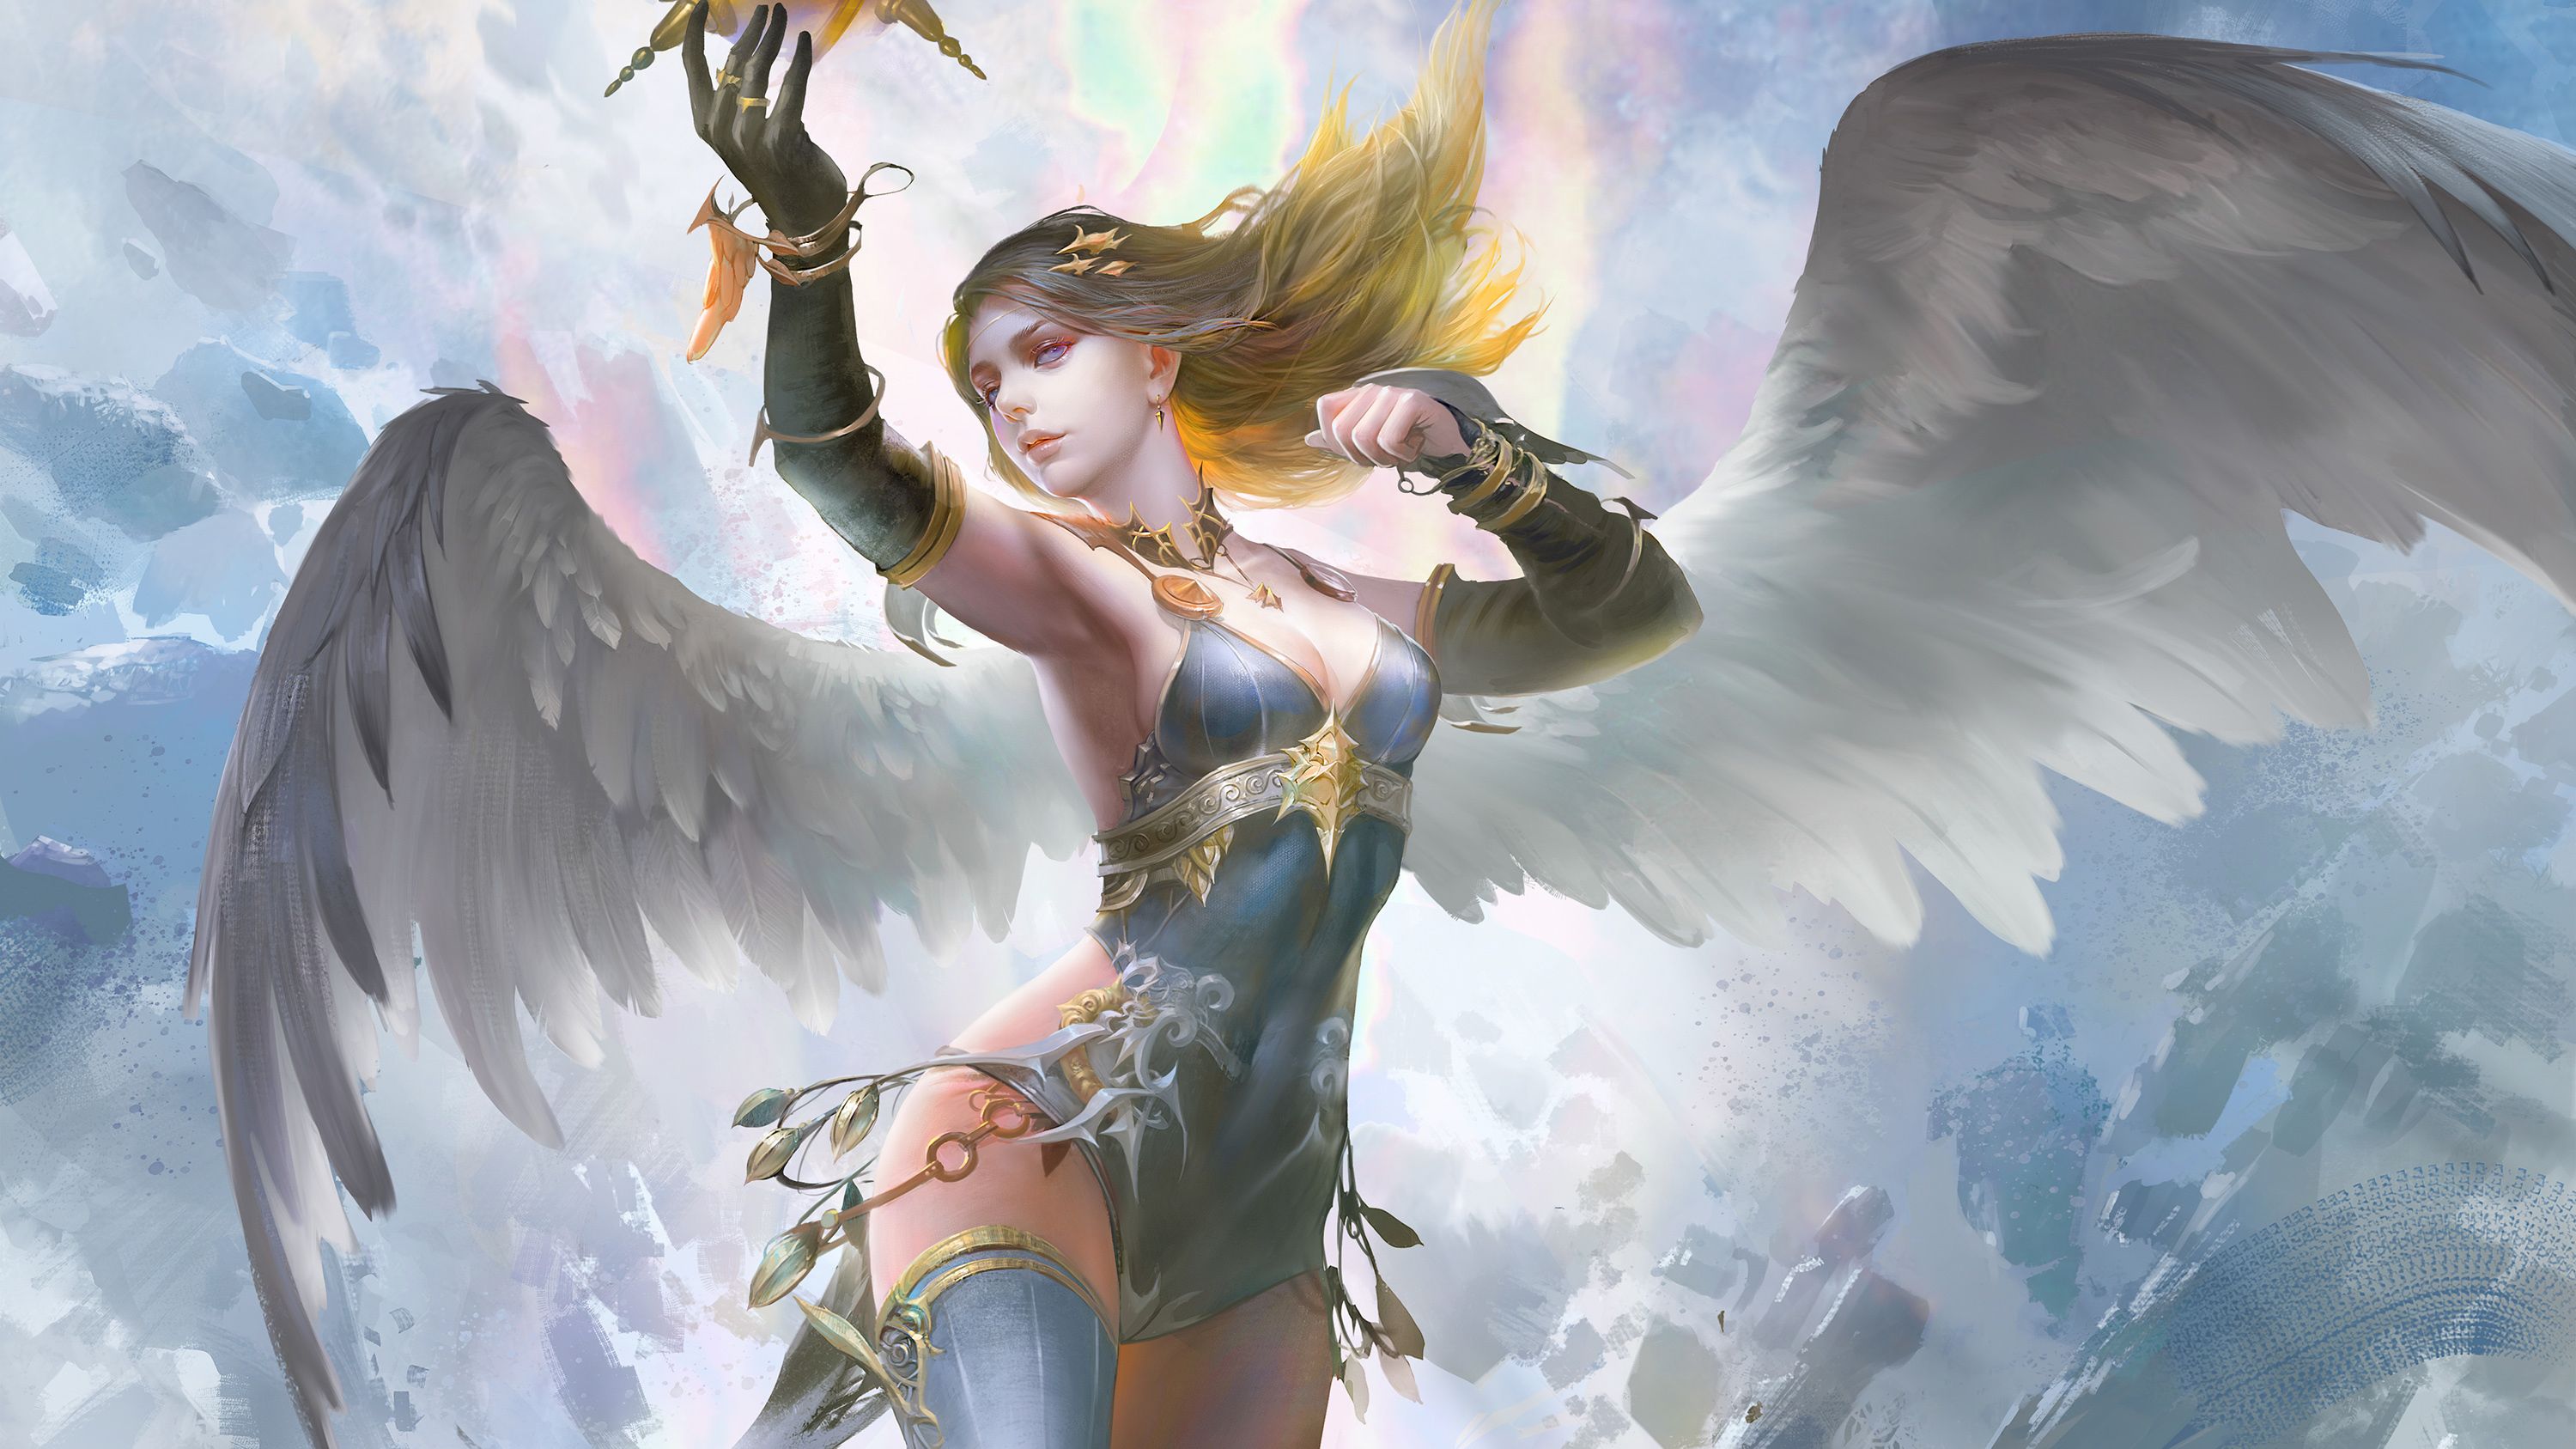 Fantasy Girl With Wings, HD Fantasy Girls, 4k Wallpaper, Image